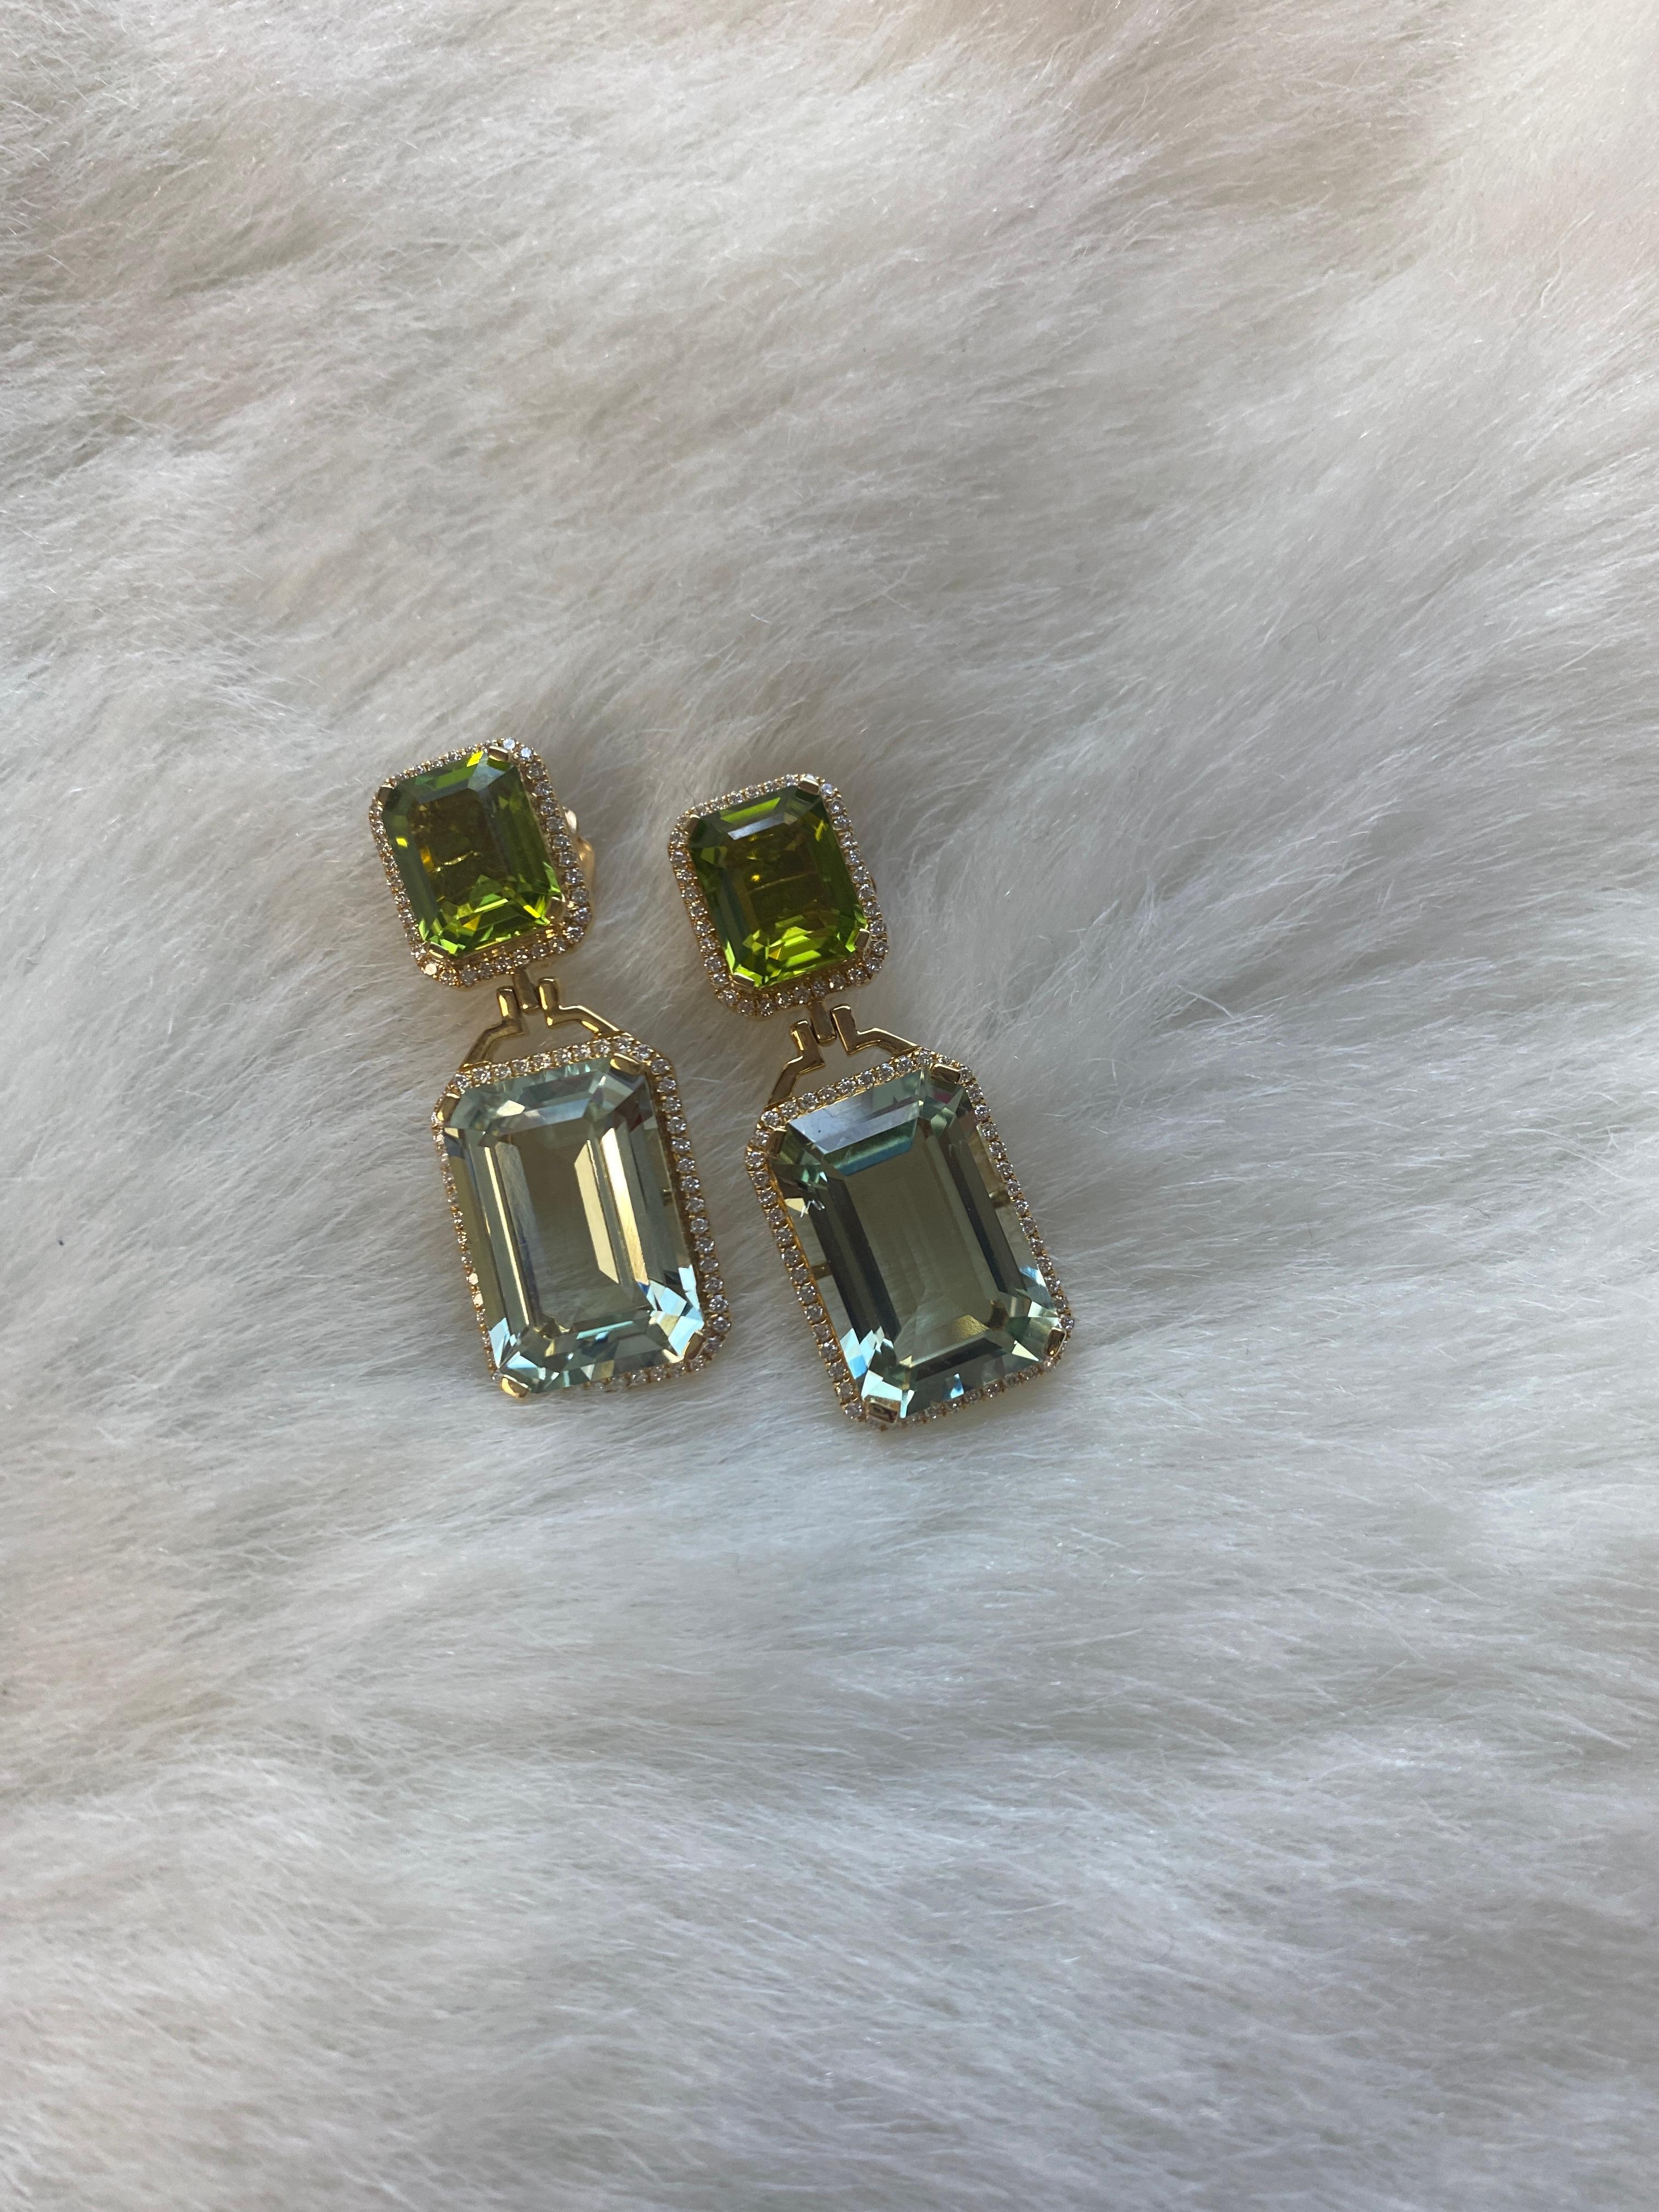 Goshwara Emerald Cut Prasiolite & Peridot With Diamond Earrings For Sale 1